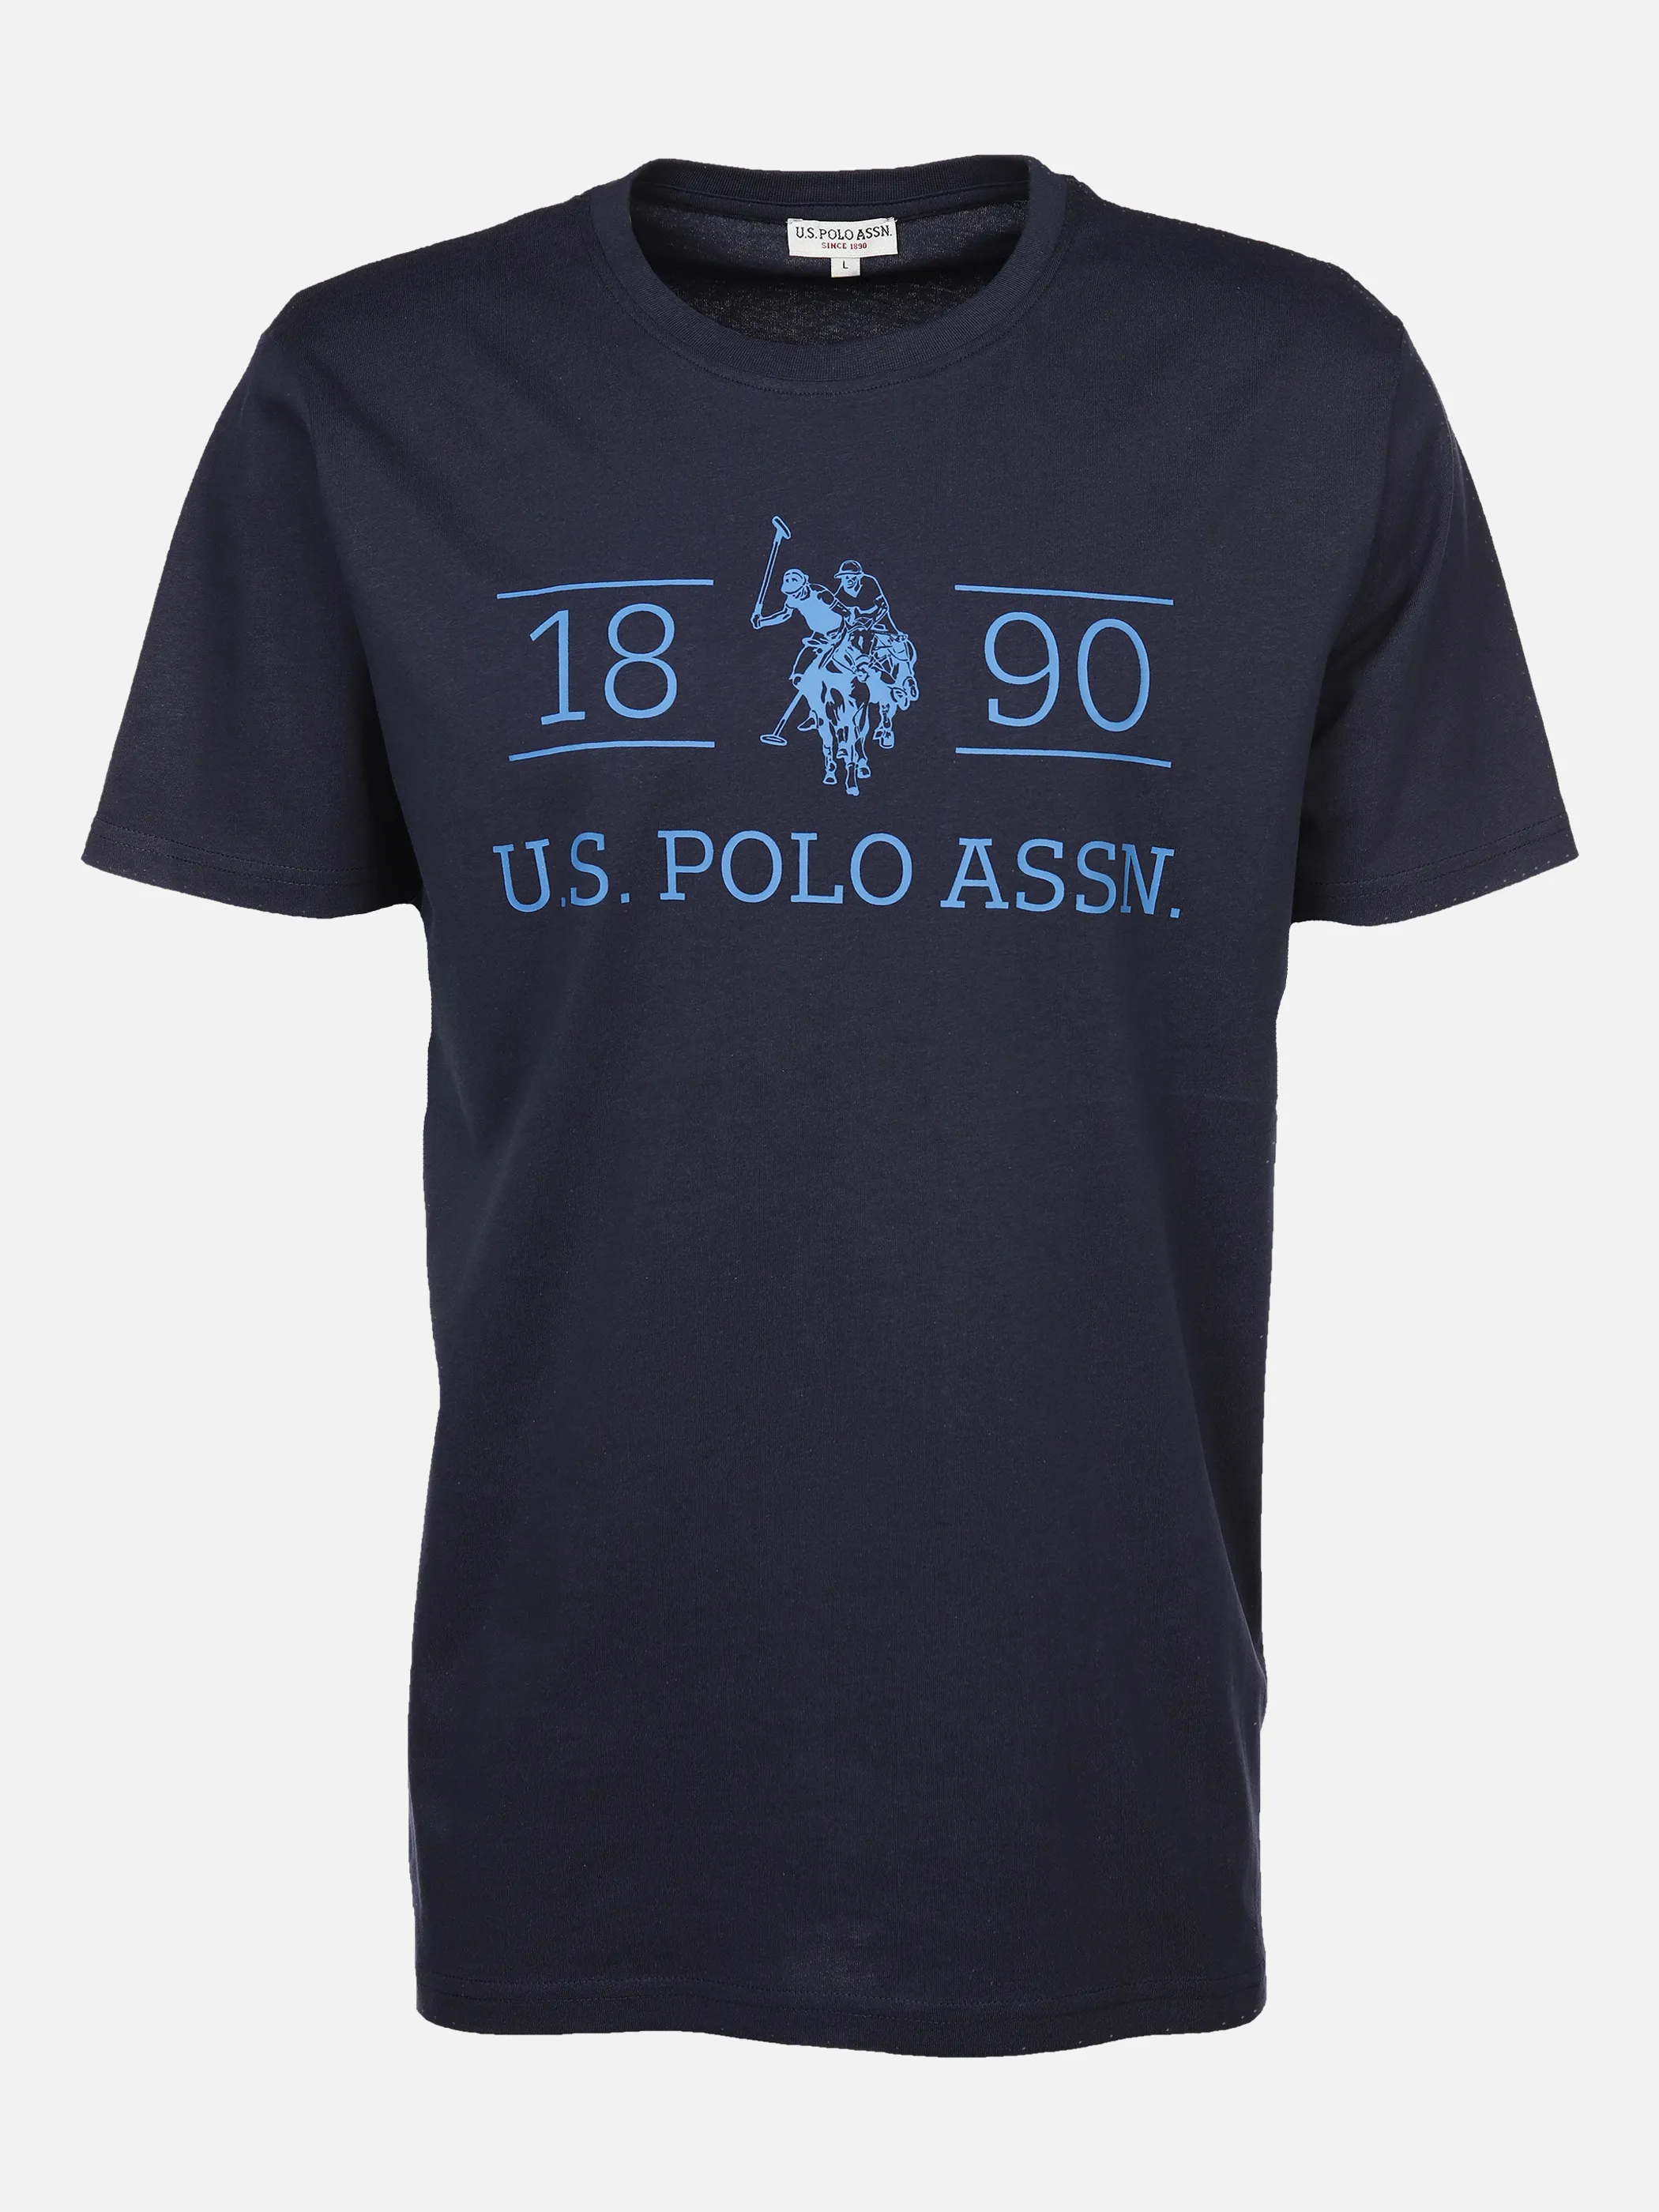 U.S. Polo Assn. He. T-Shirt 1/2 Arm Logo 1890 Blau 881277 NAVY 1